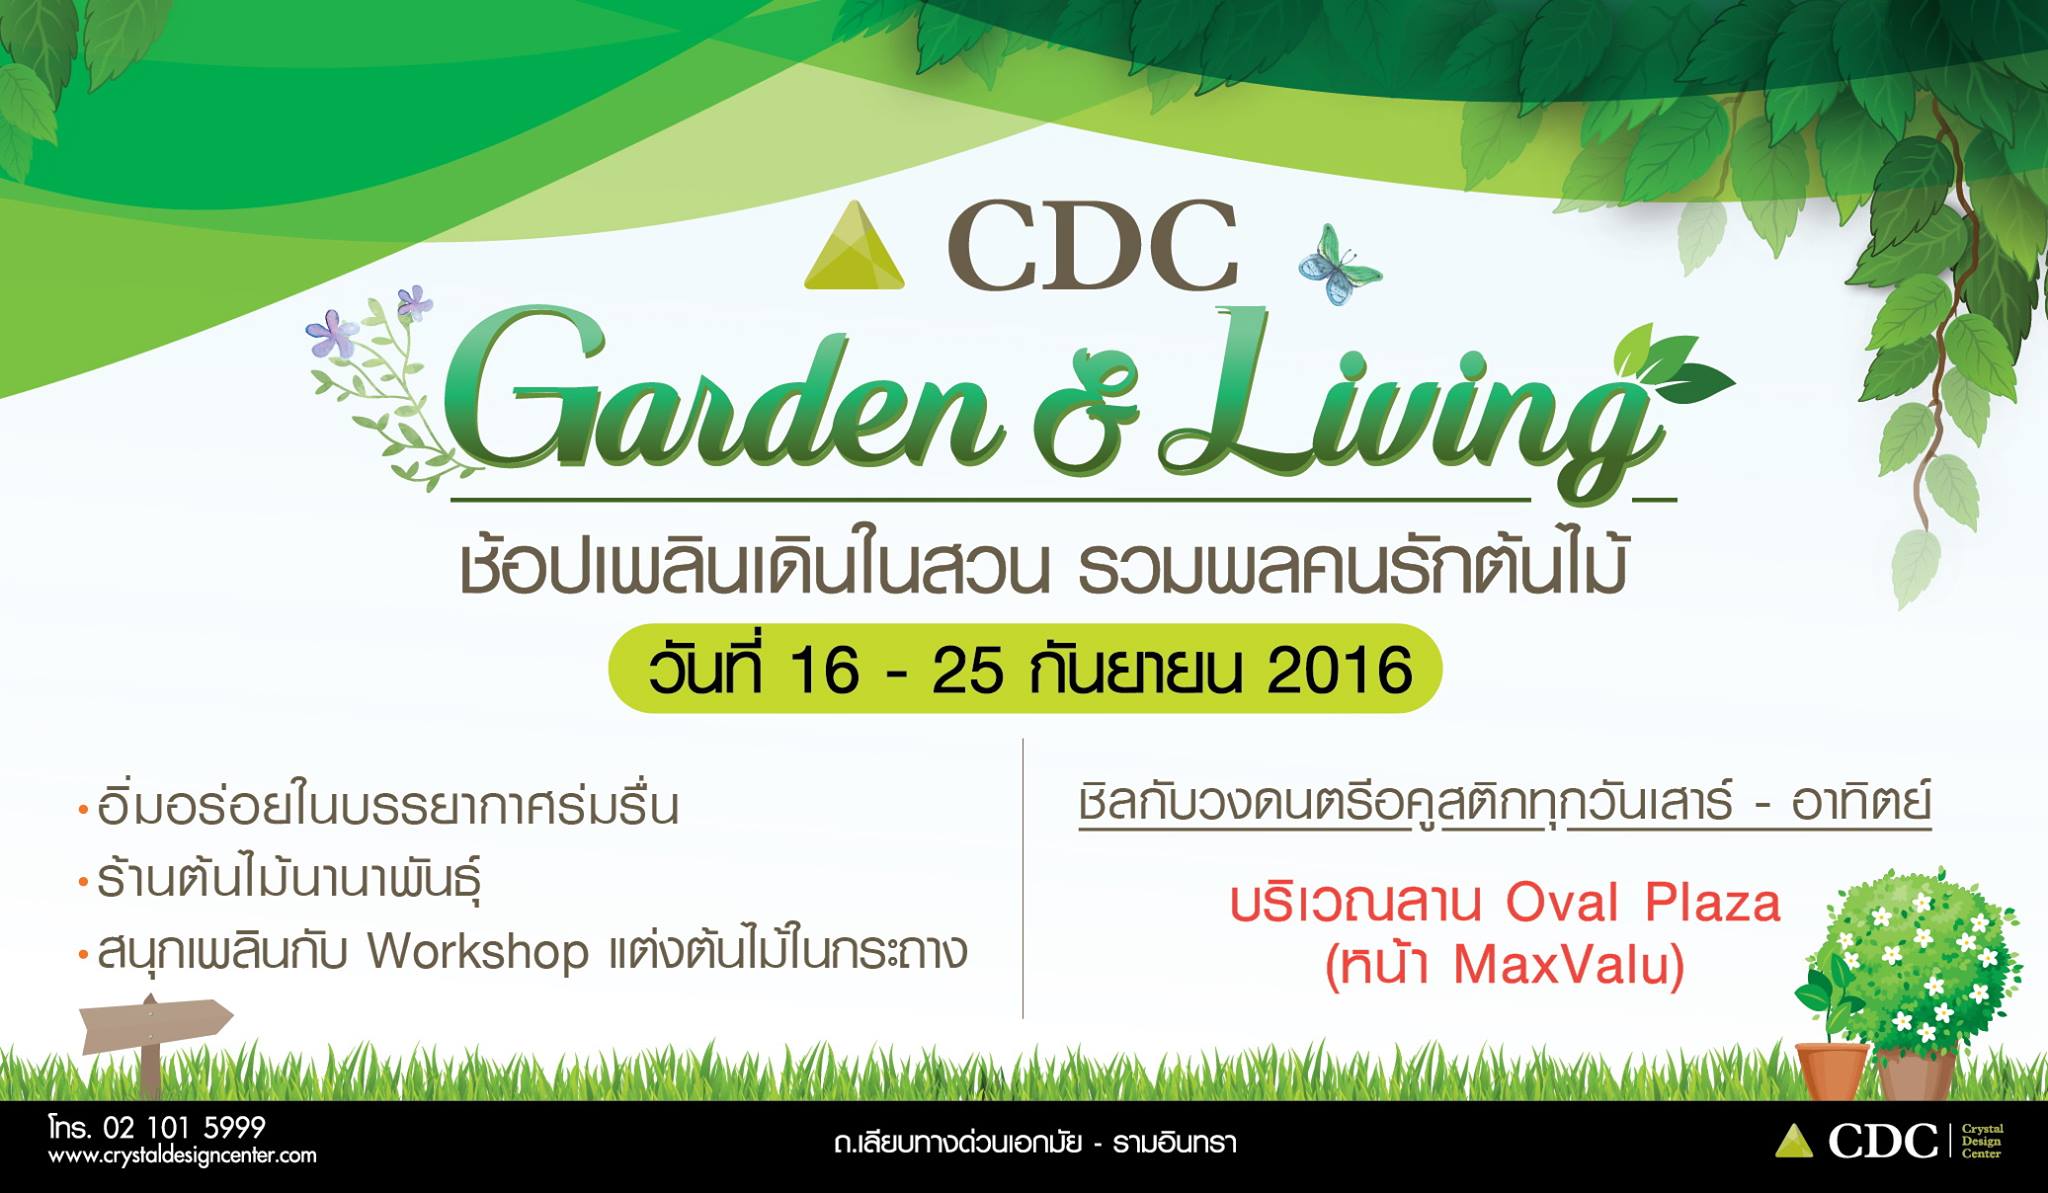 CDC Garden & Living